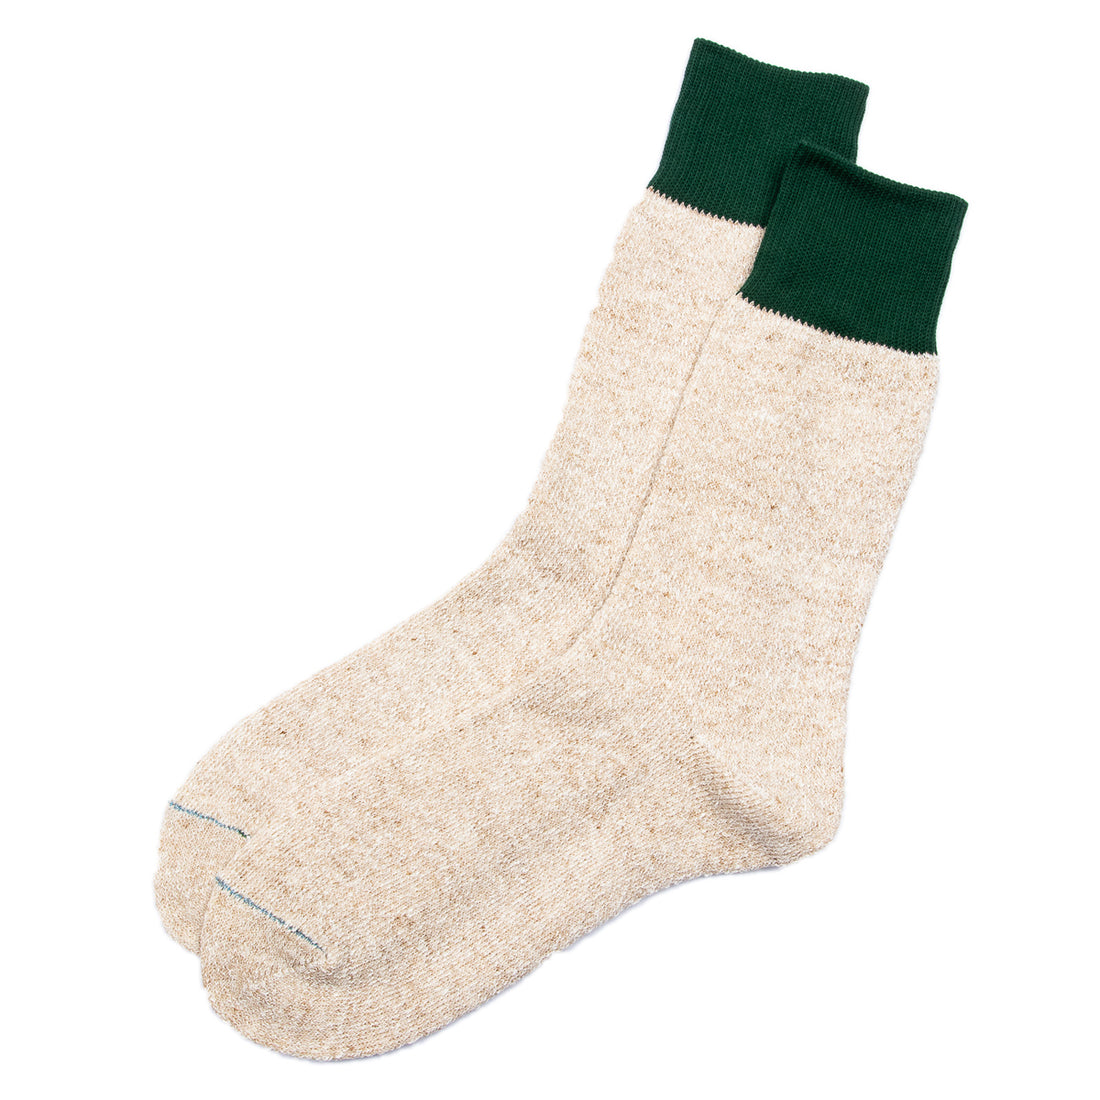 RoToTo Double Face Silk/Cotton Socks - Green/Beige - Standard & Strange